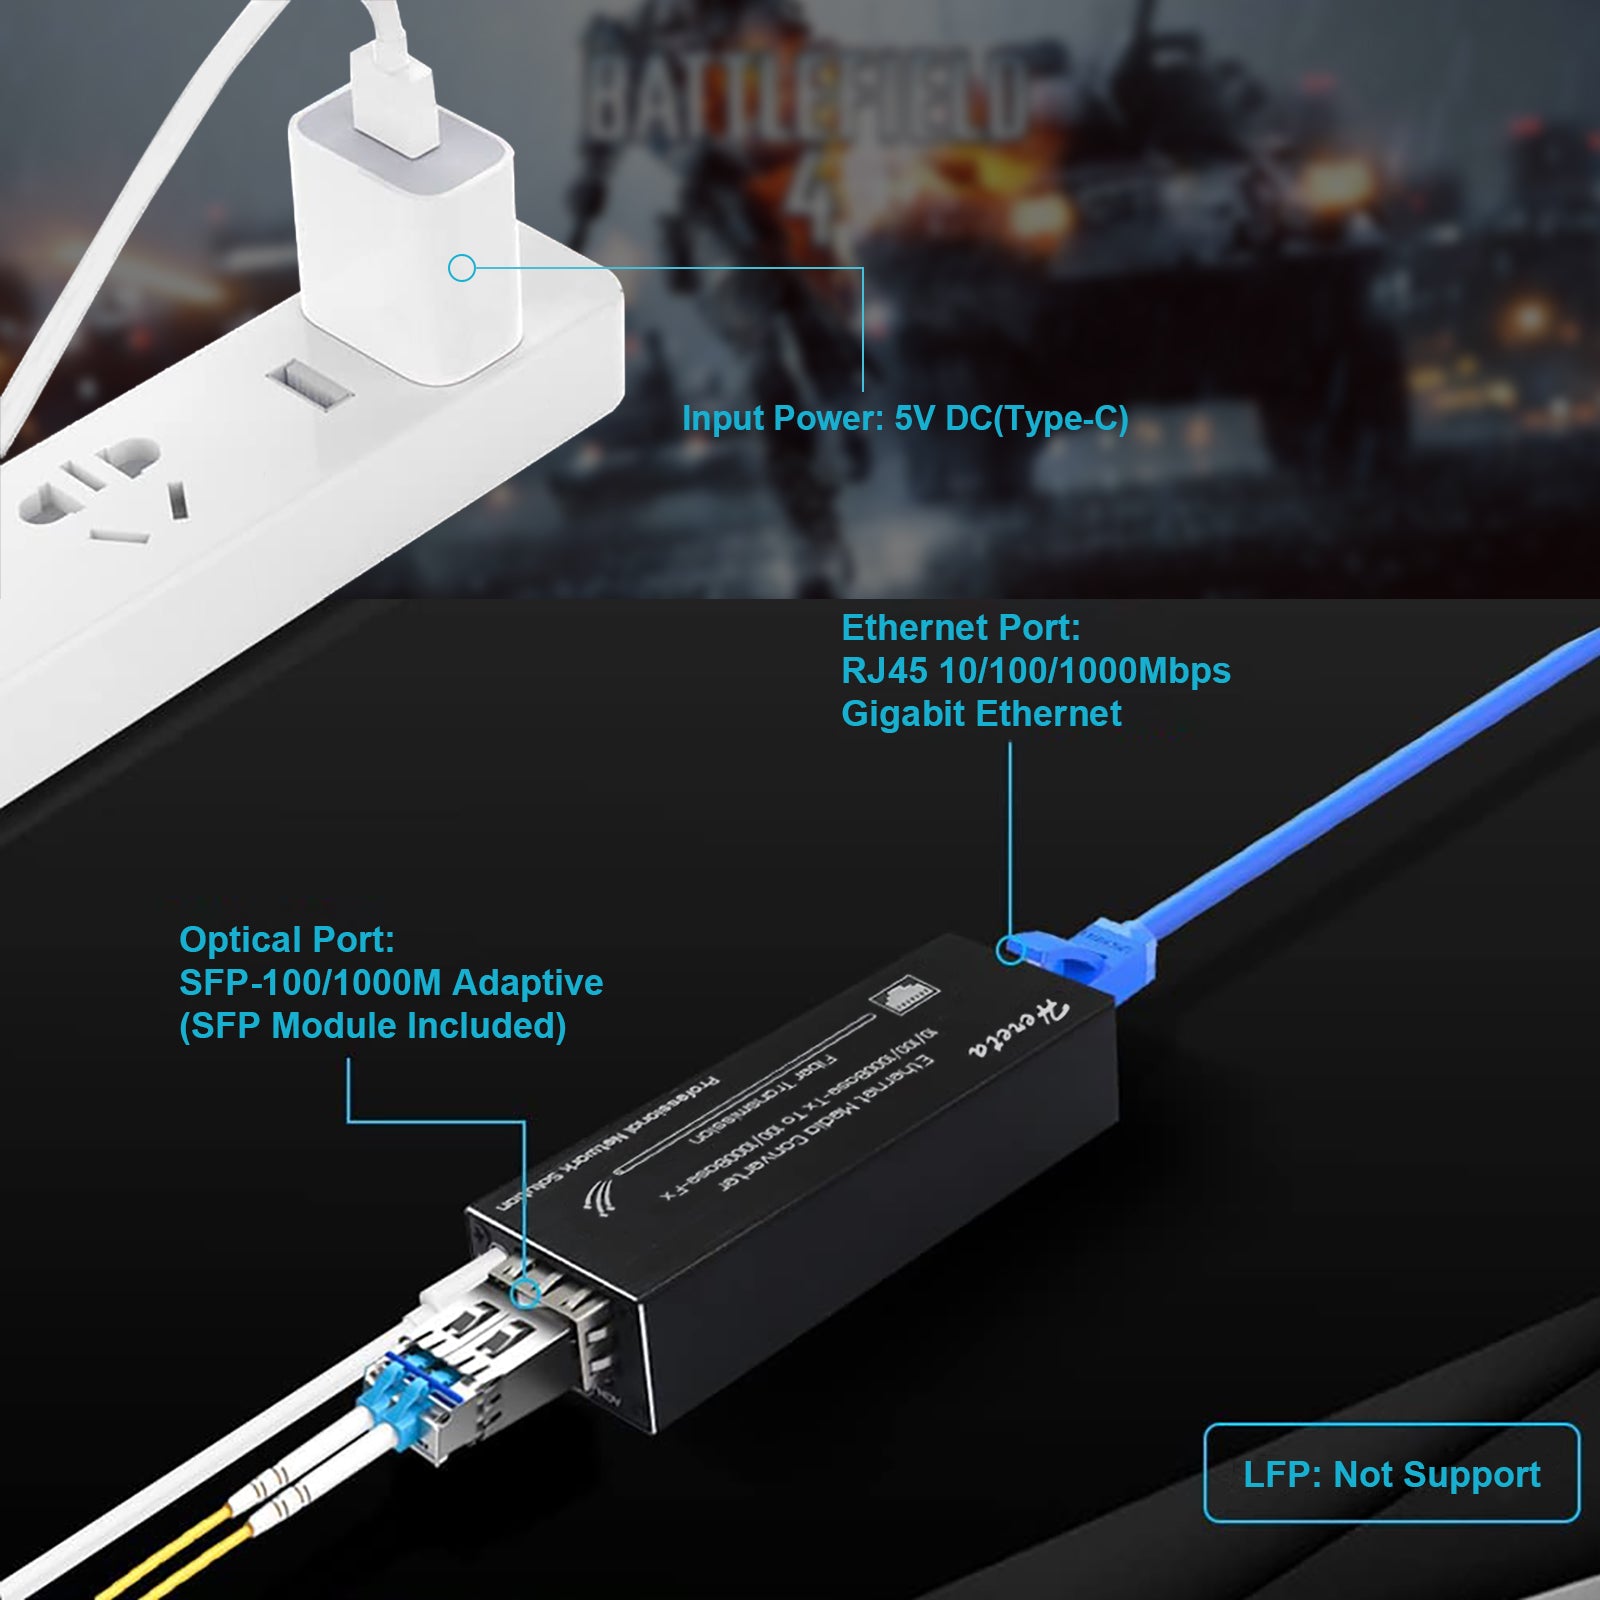 Industrial Hardened Gigabit Fiber Media Converter with Single Mode Dua –  Hereta